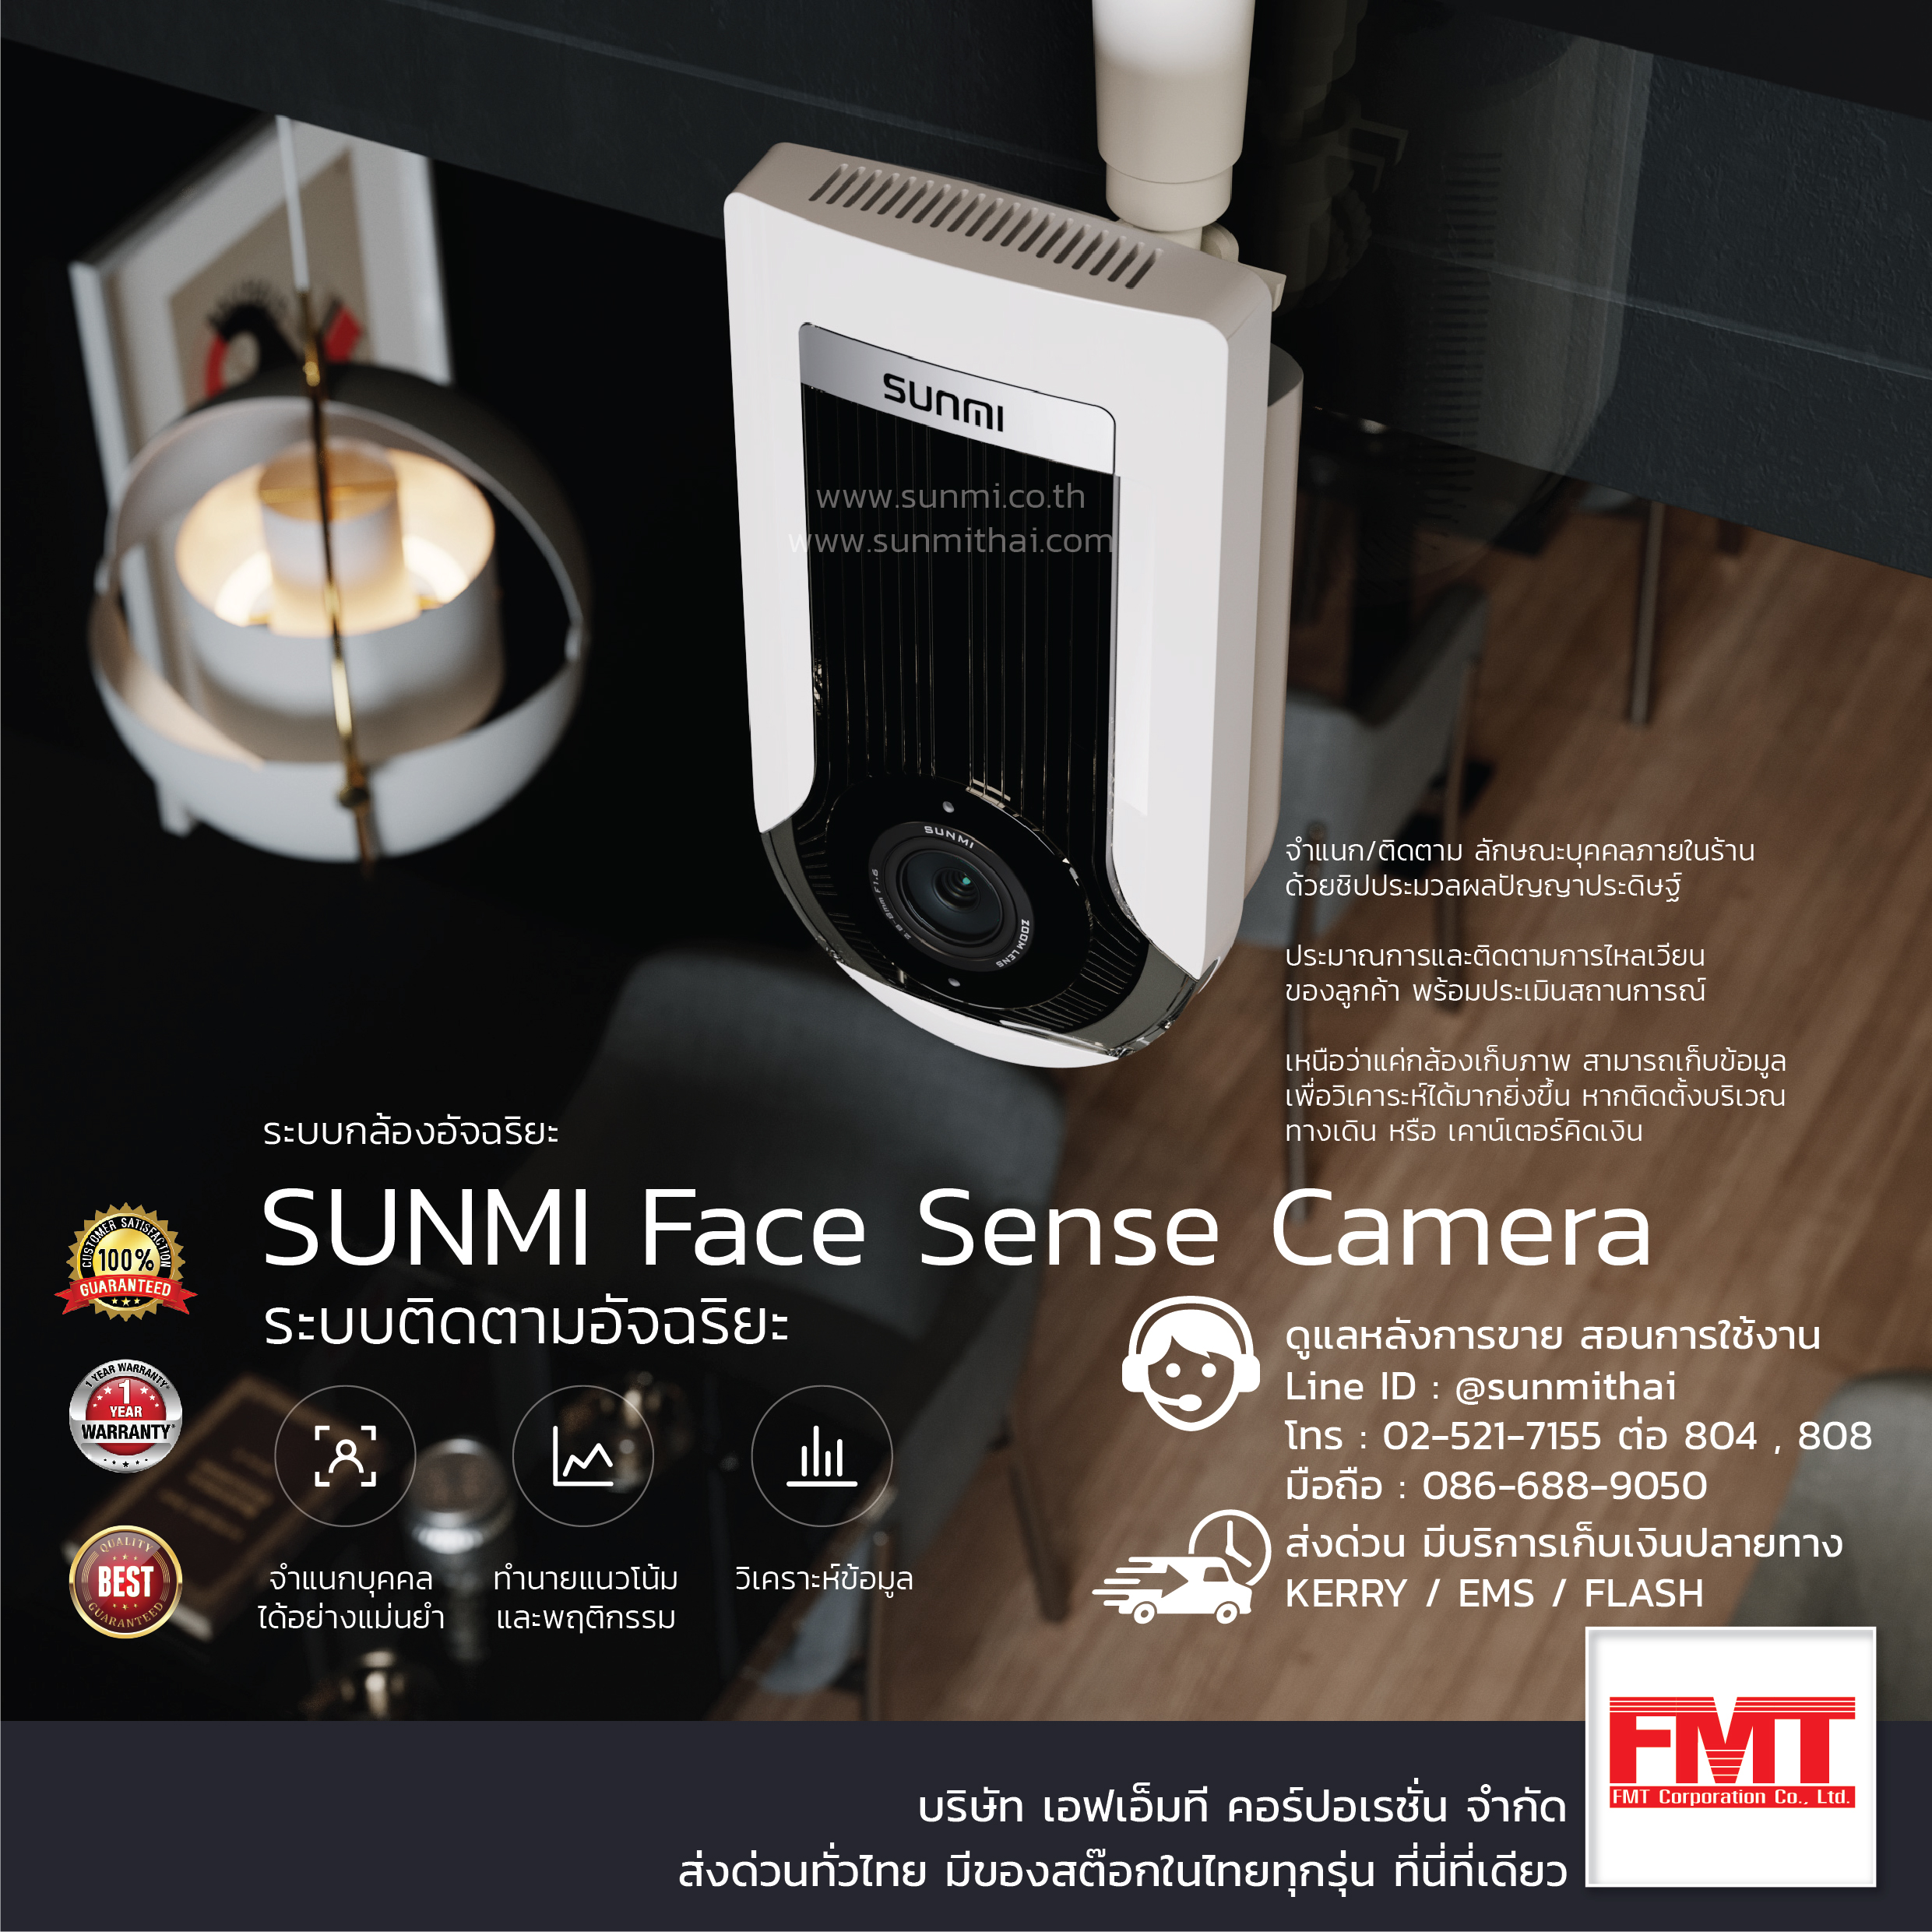 SUNMI Face Sense Camera